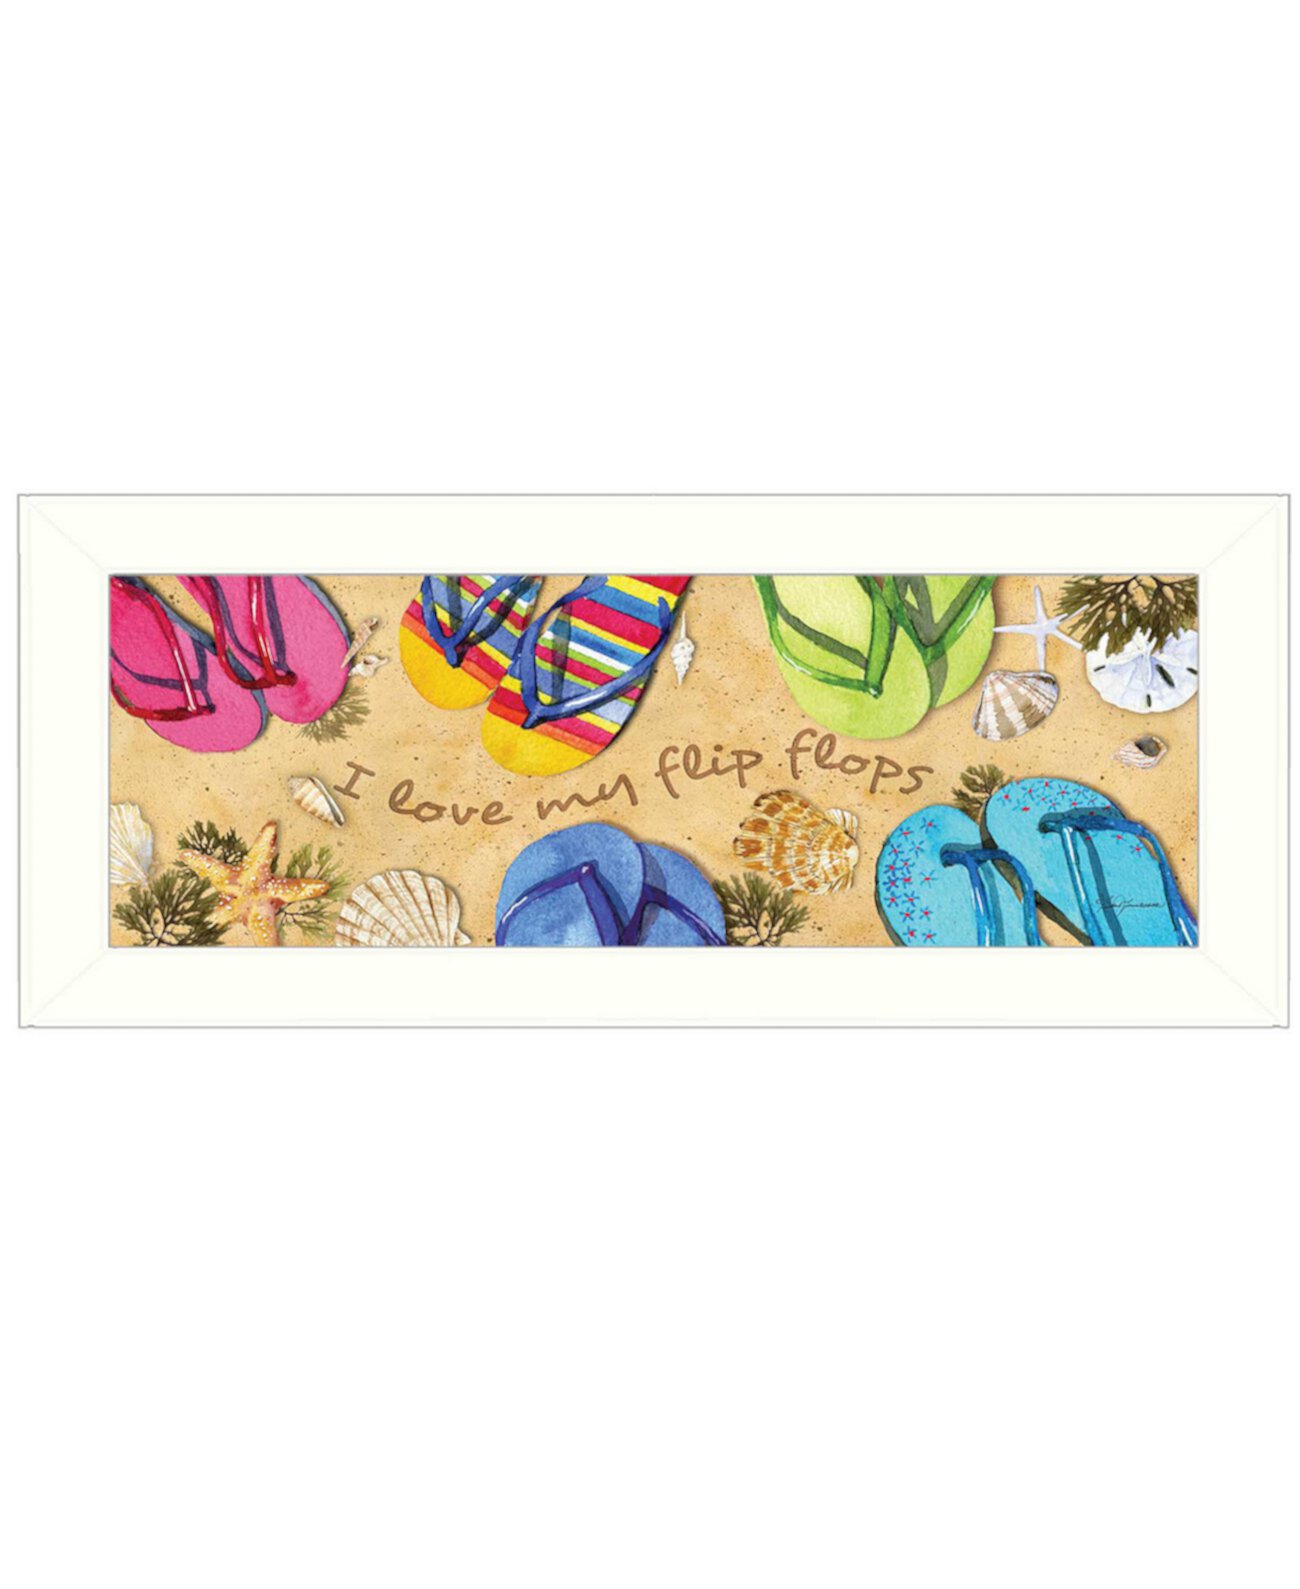 I Love My Flip Flops By Barb Tourtillotte, настенные рисунки с принтом, готовые к развешиванию, белая рамка, 8 "x 20" Trendy Décor 4U